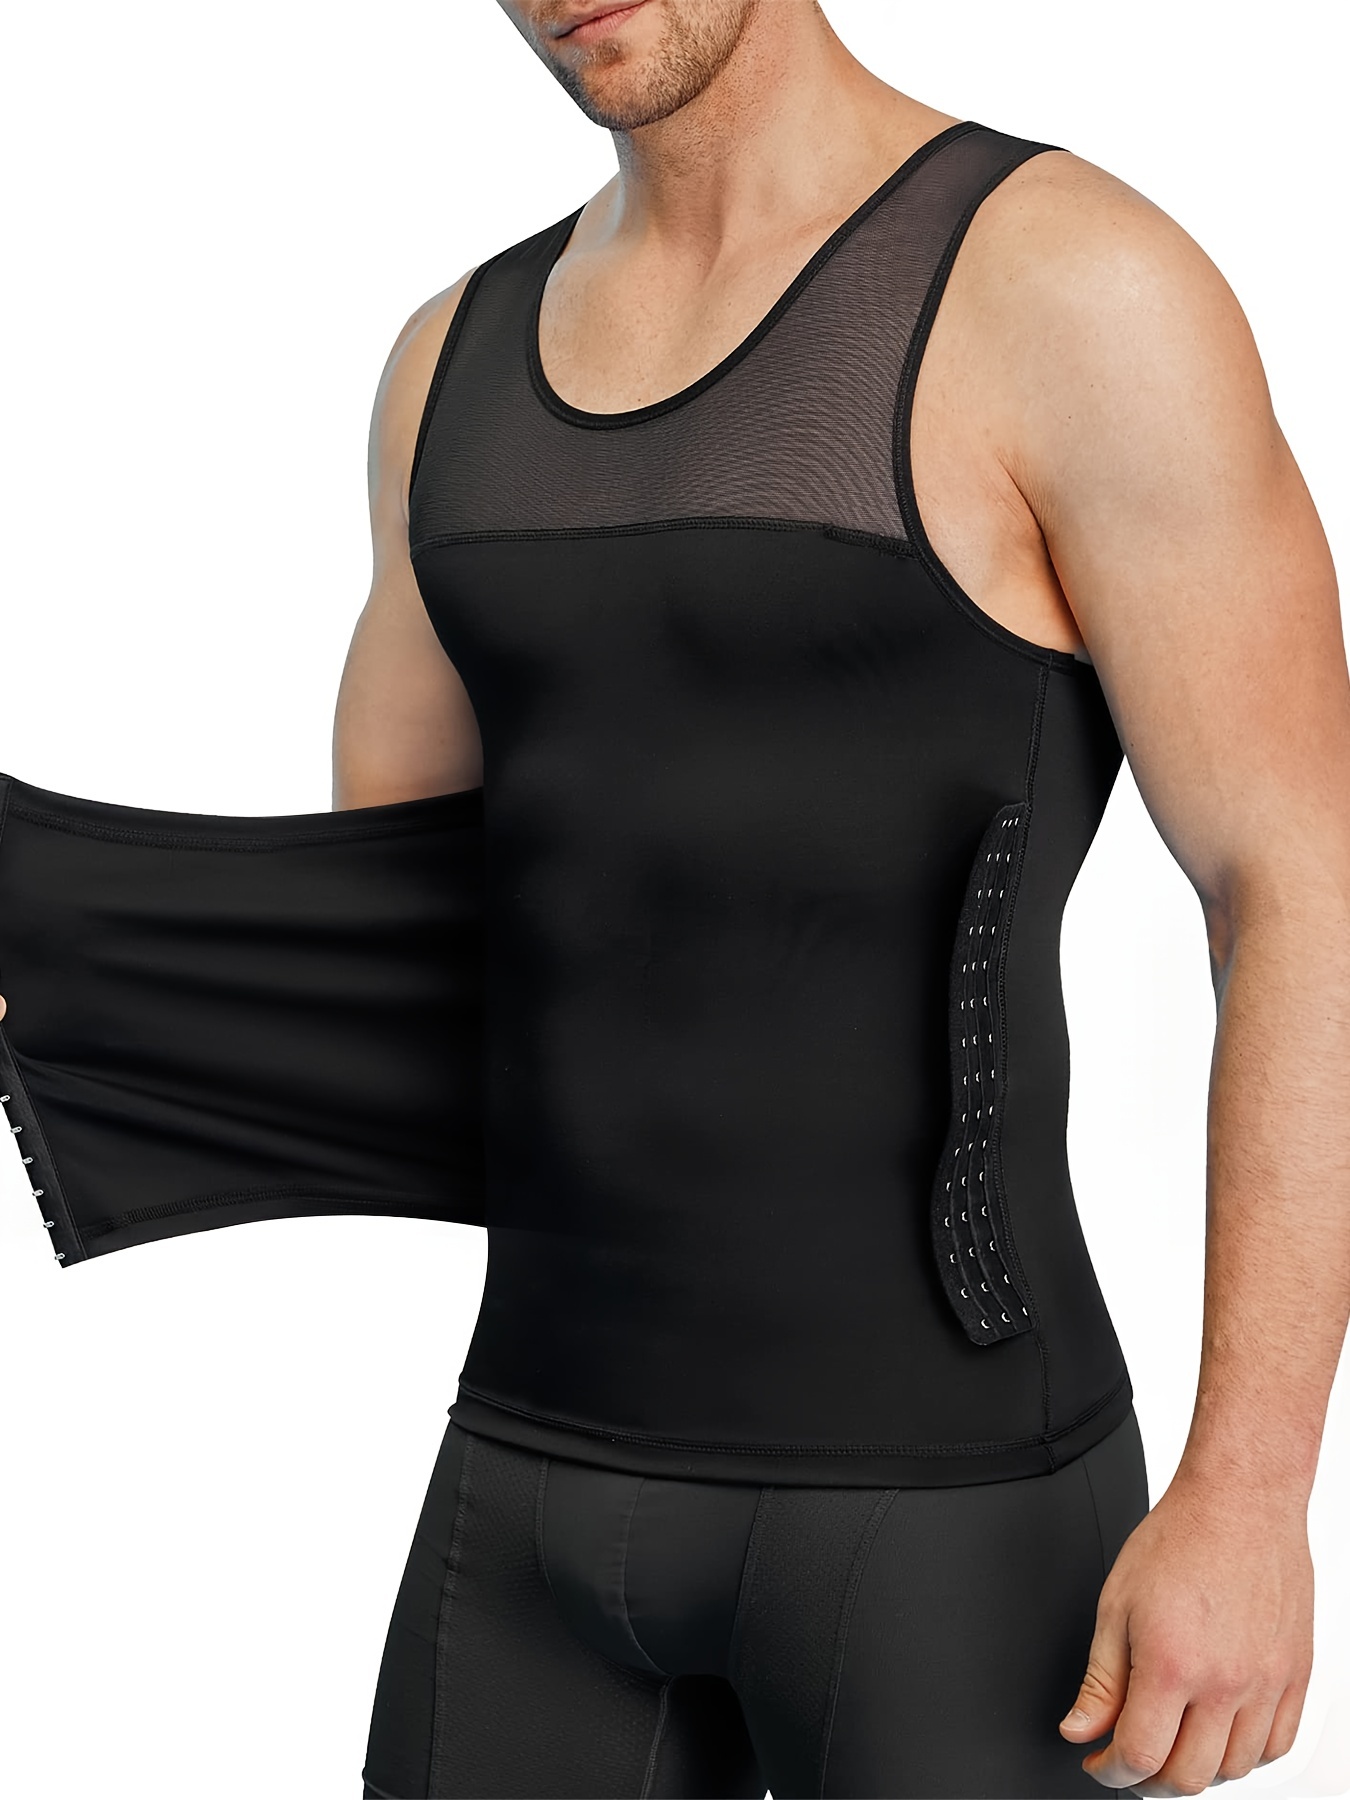 * Men's Compression Tummy Control Tight Vest Body Shapewear Slimming Top